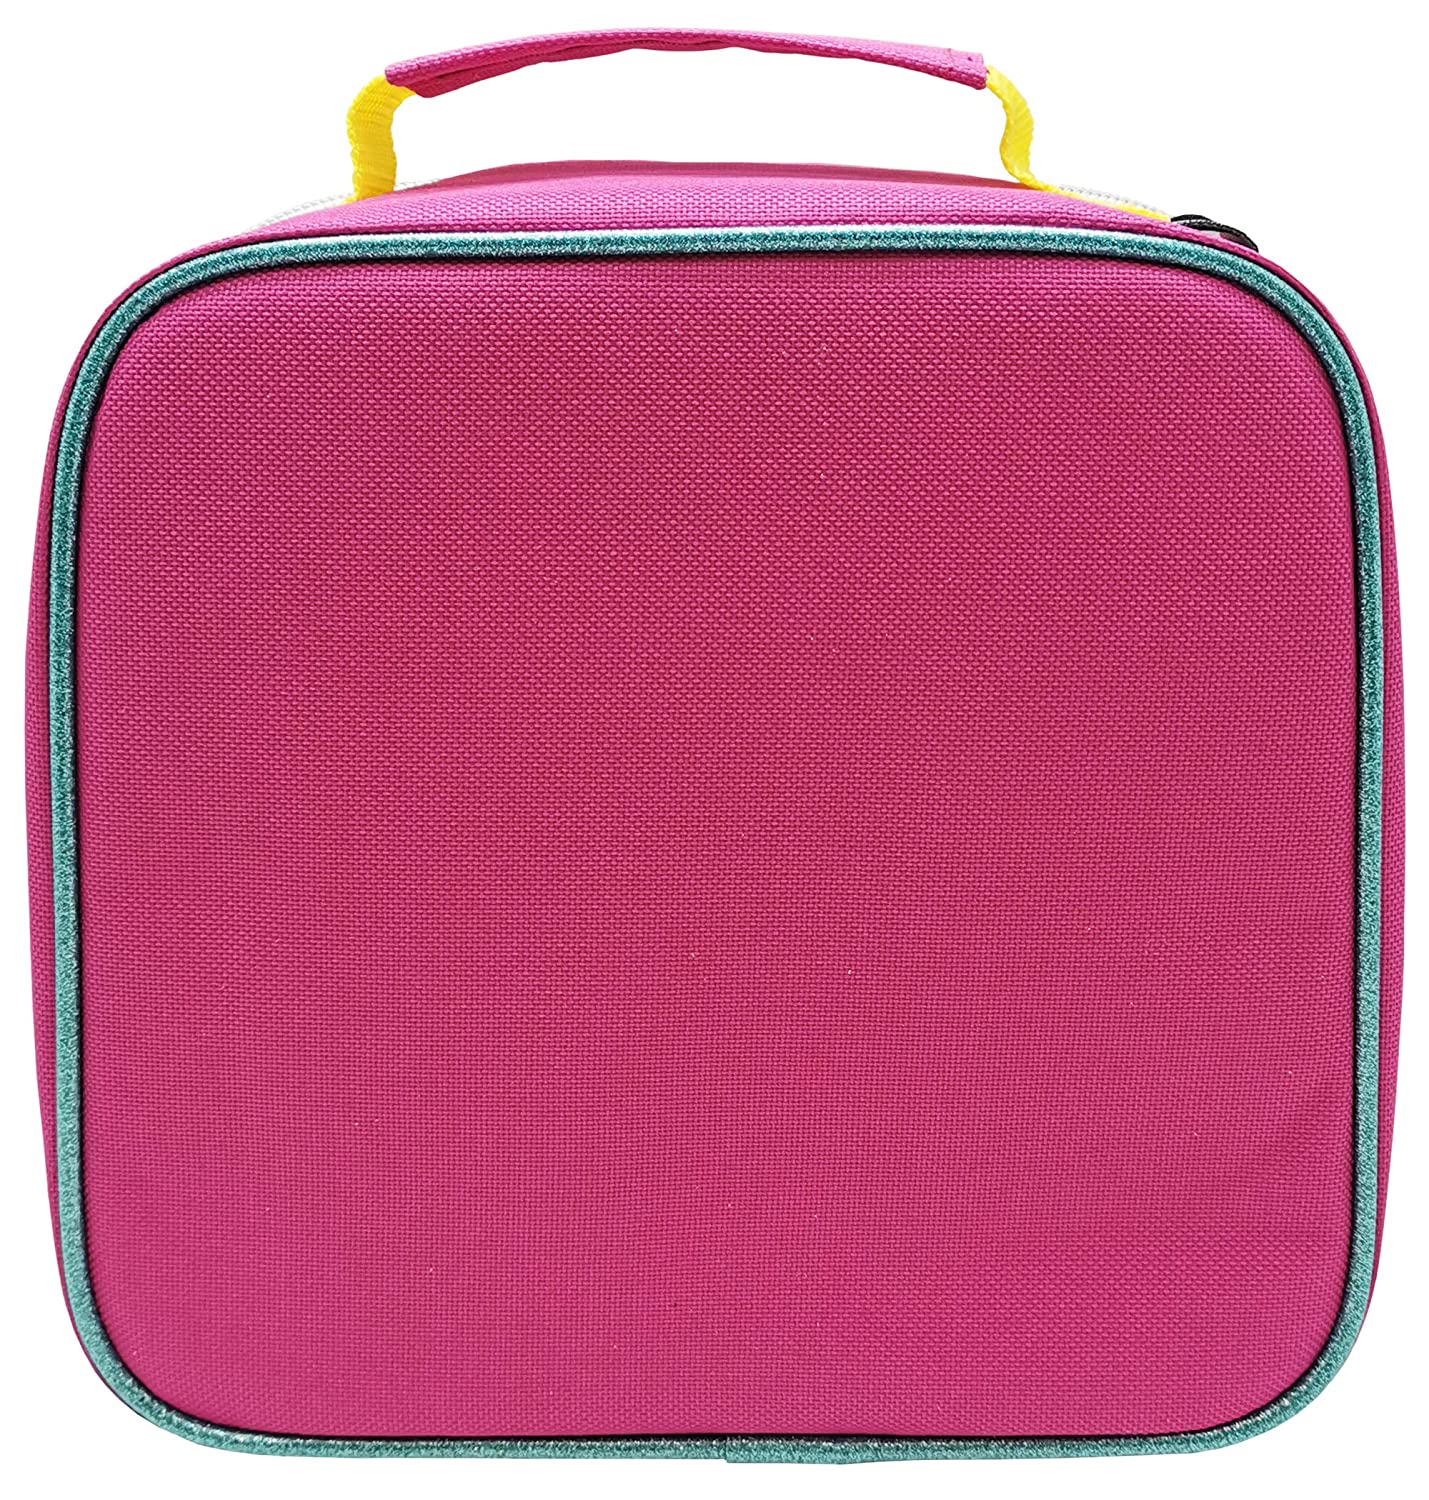 Trolls World Tour Poppy Pink Rainbow Lunch Box Bag